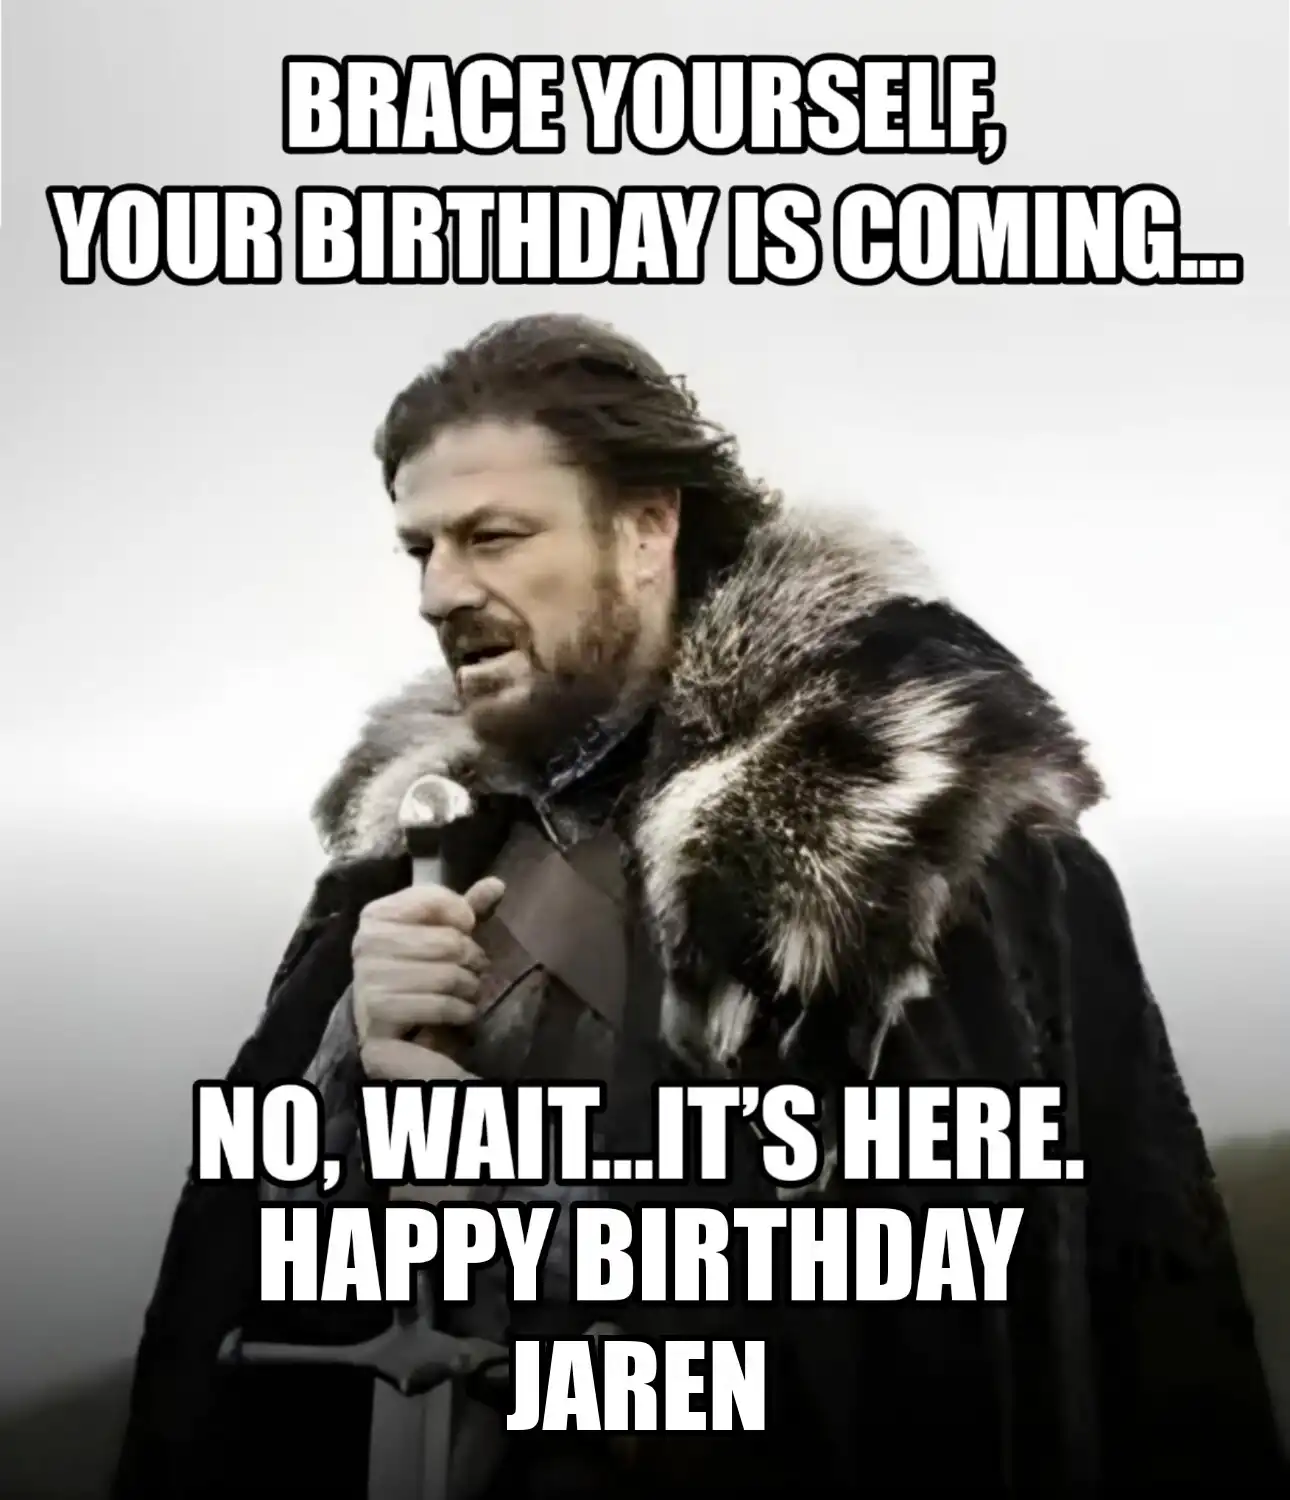 Happy Birthday Jaren Brace Yourself Your Birthday Is Coming Meme